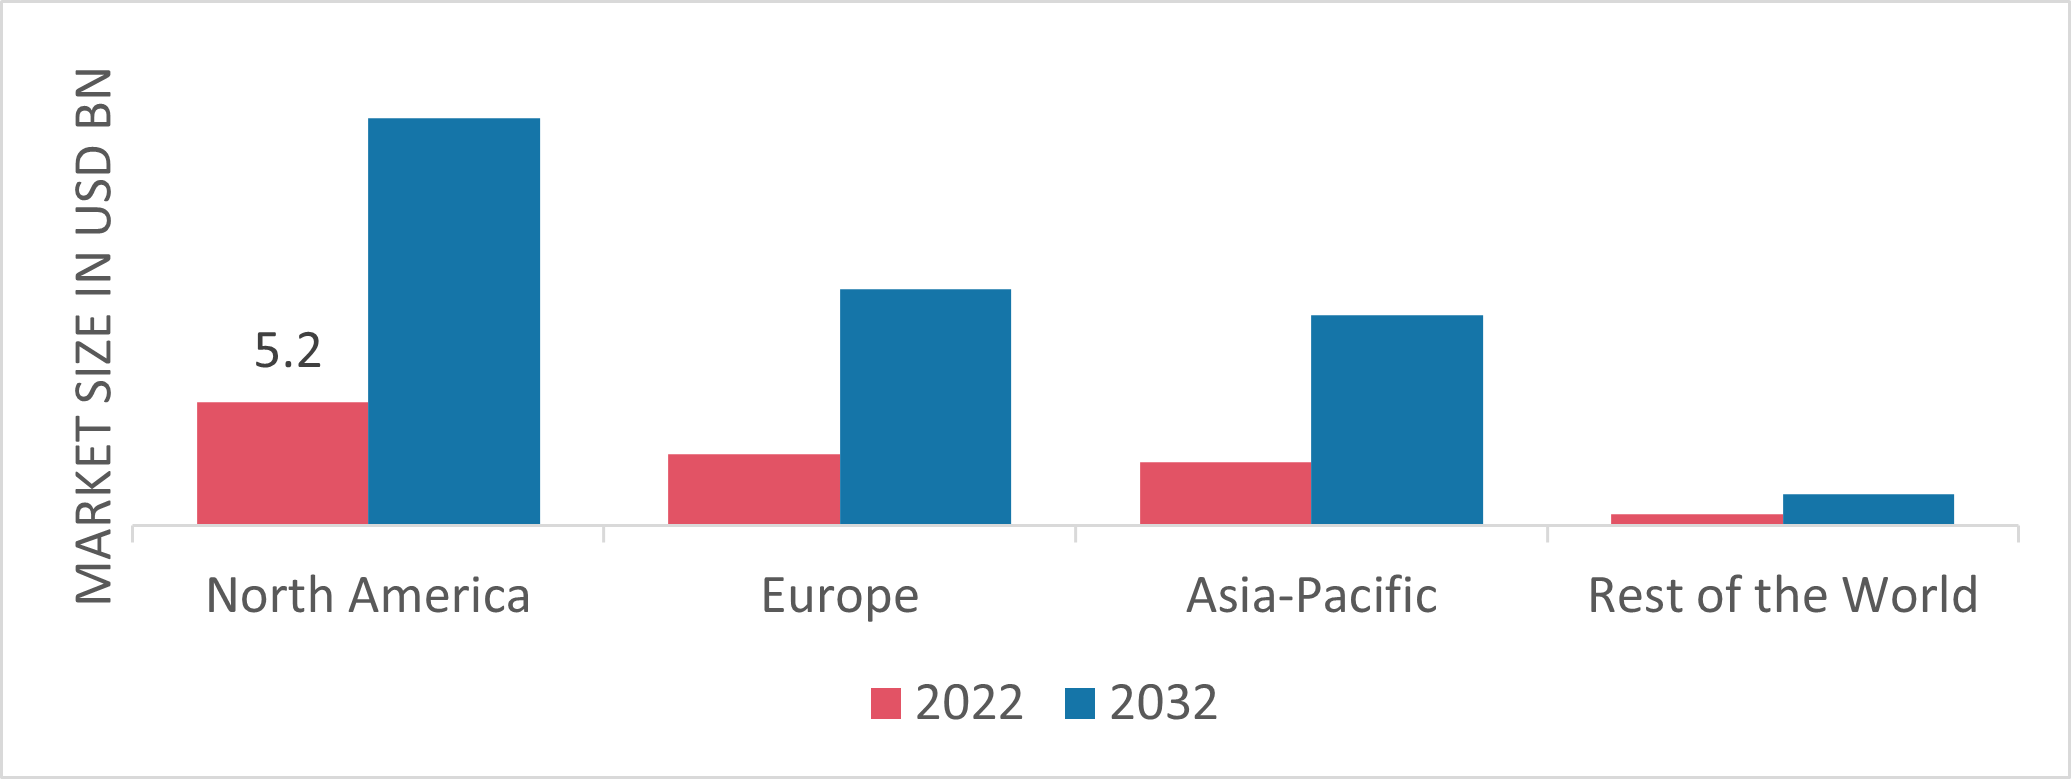 Figure 2: Hydraulic Fracturing Market Share By Region 2022 (Usd Billion)